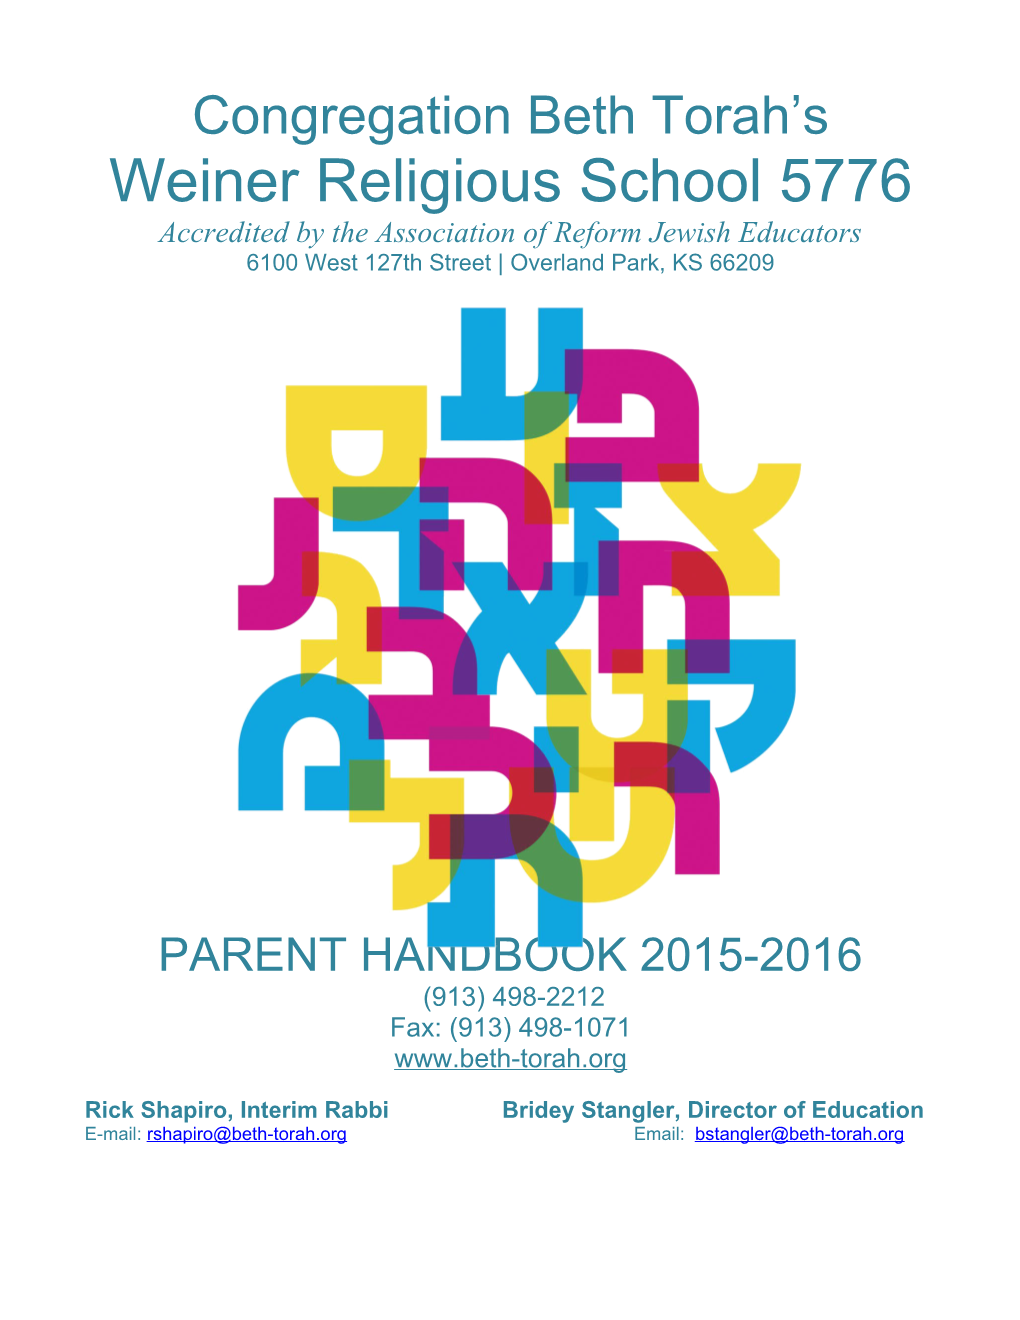 What Is Congregation Beth Torah S Weiner Religious School